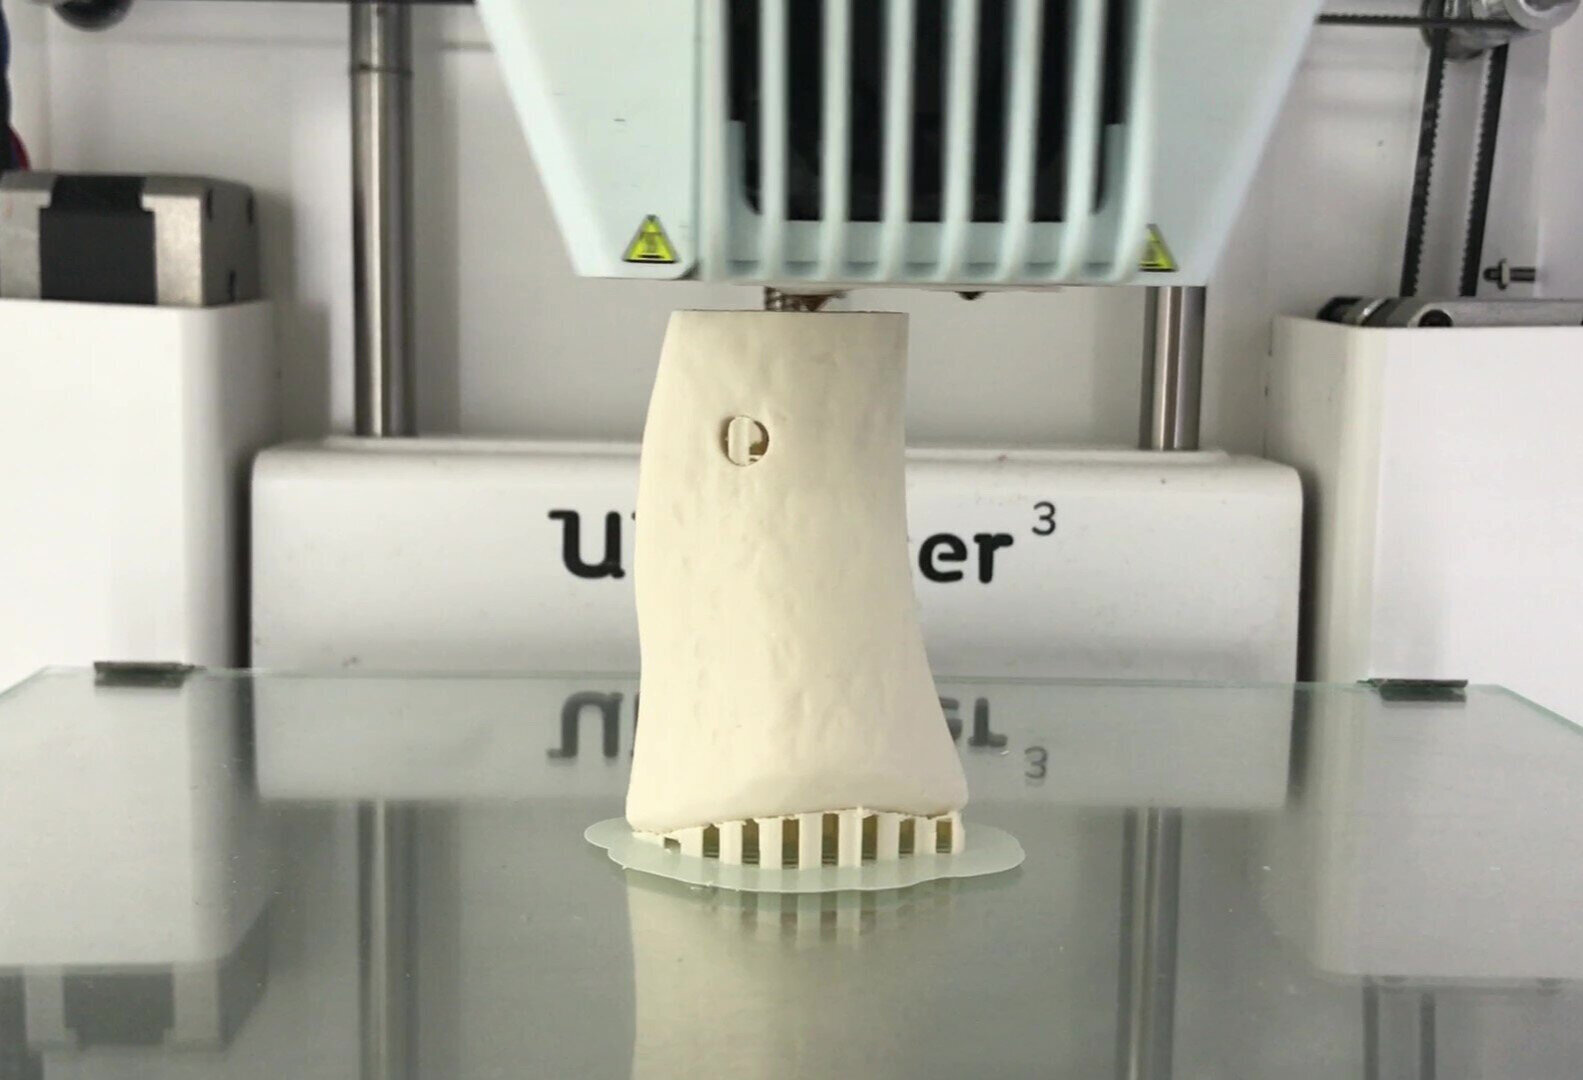   Antler comb 3D printing | Image: Eagle Labs Edinburgh  